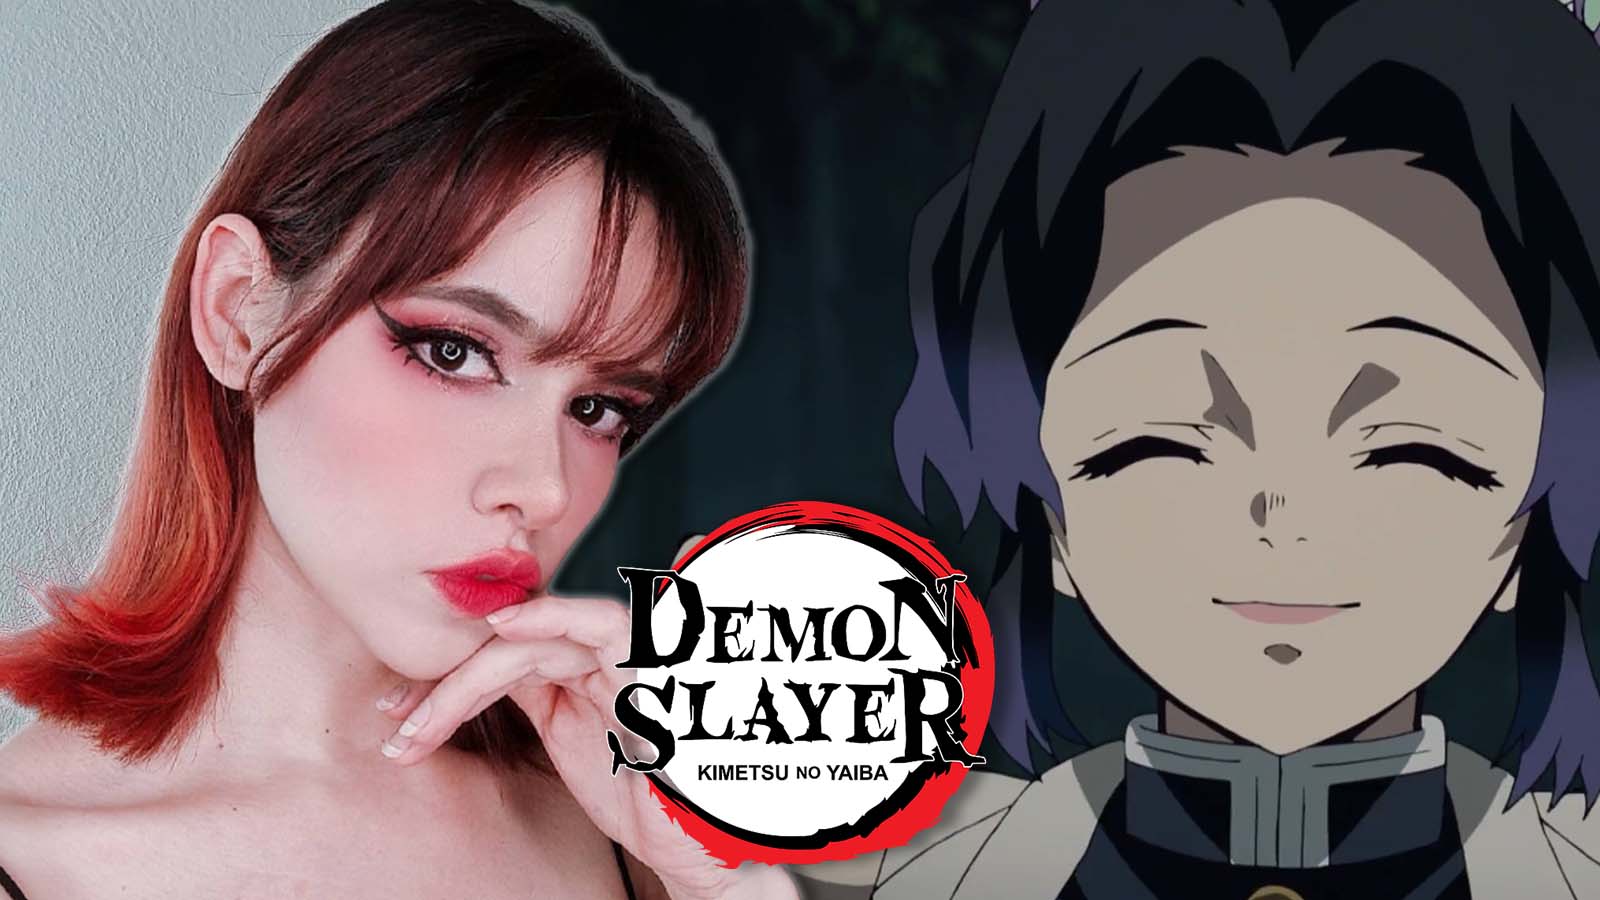 2 characters from anime series demon slayer: shinobu kocho